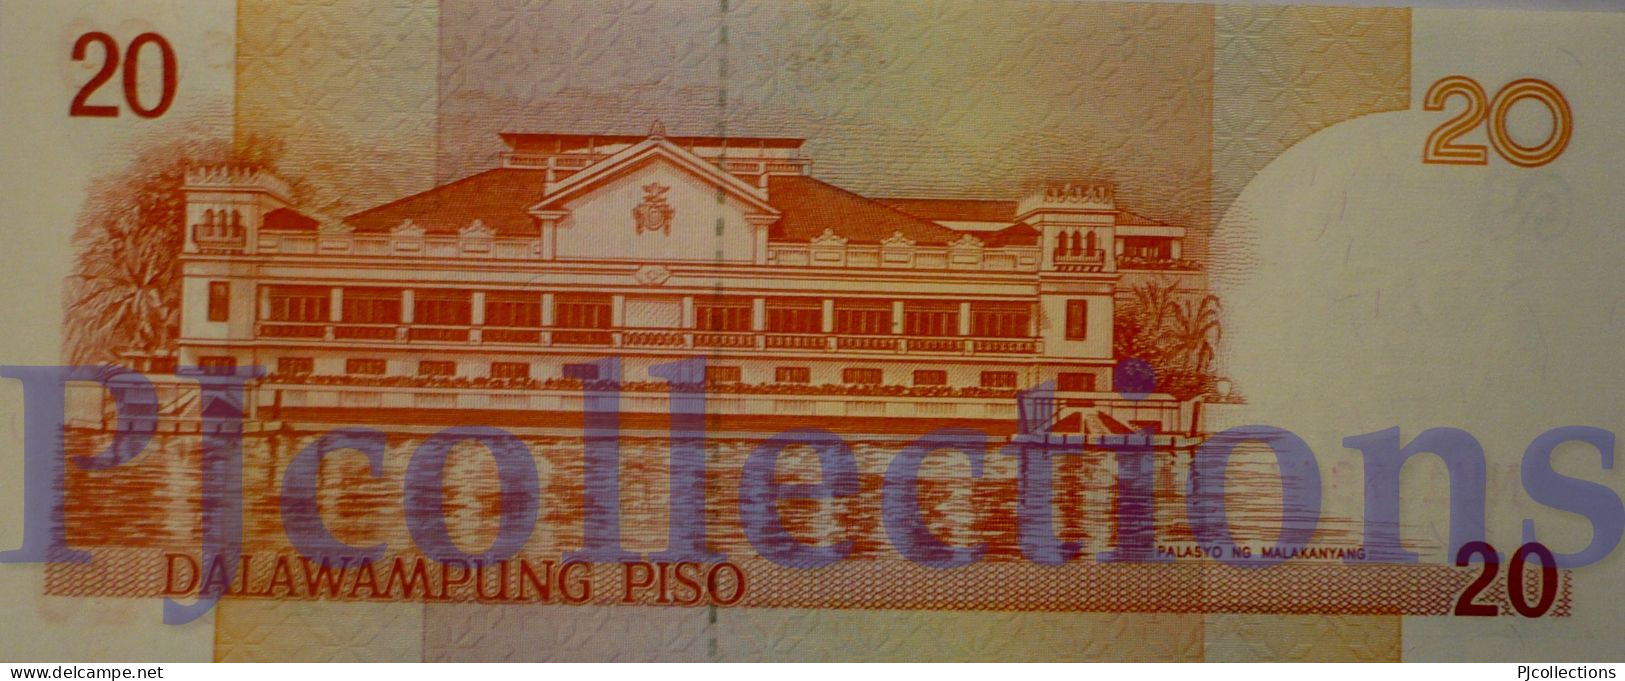 PHILIPPINES 20 PISO 1997 PICK 182a UNC - Philippinen